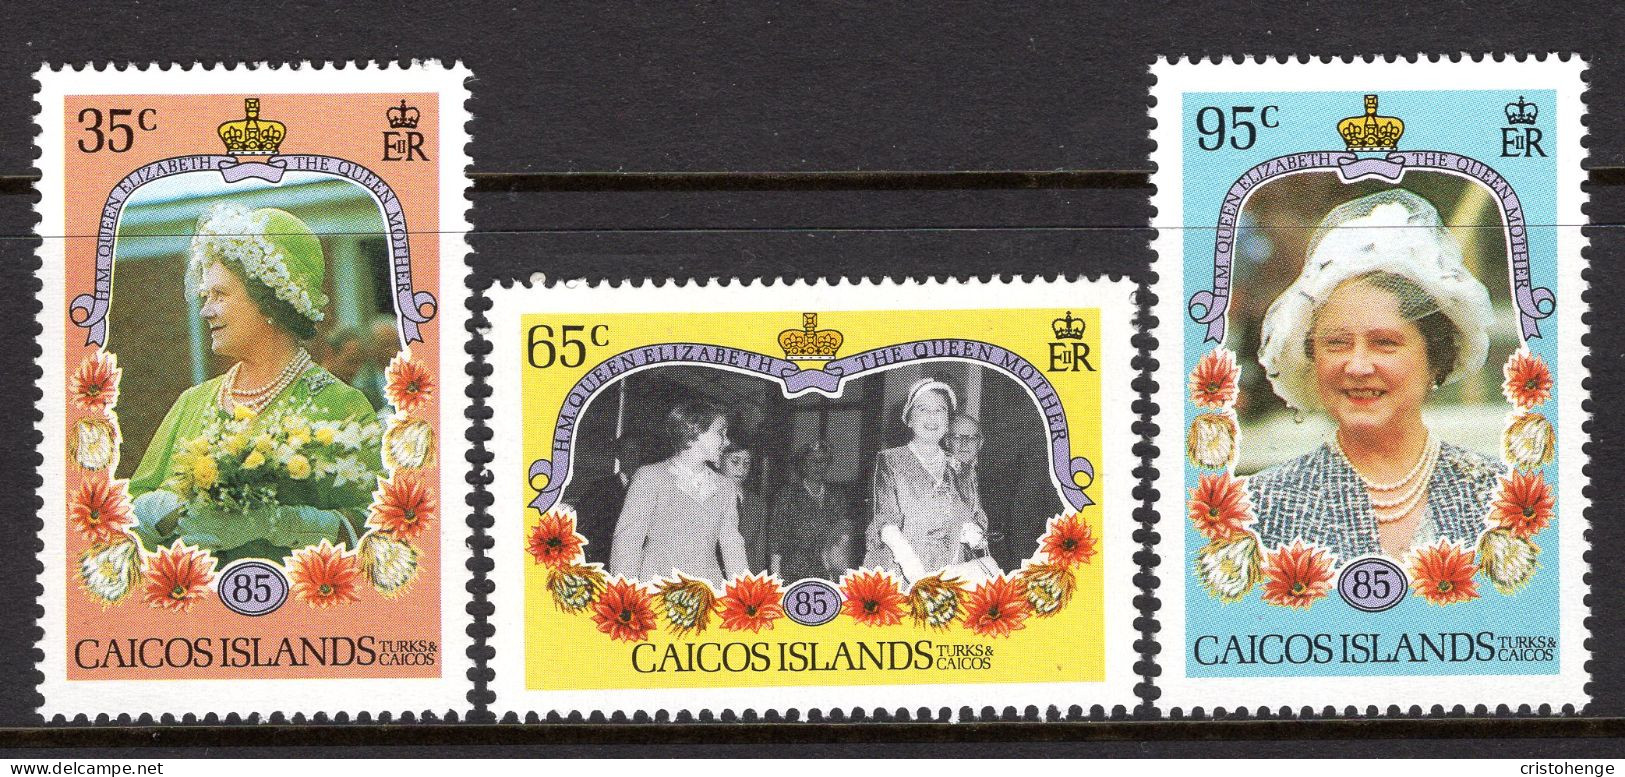 Caicos Islands 1985 Life & Times Of Queen Elizabeth The Queen Mother Set MNH (SG 82-84) - Turks & Caicos